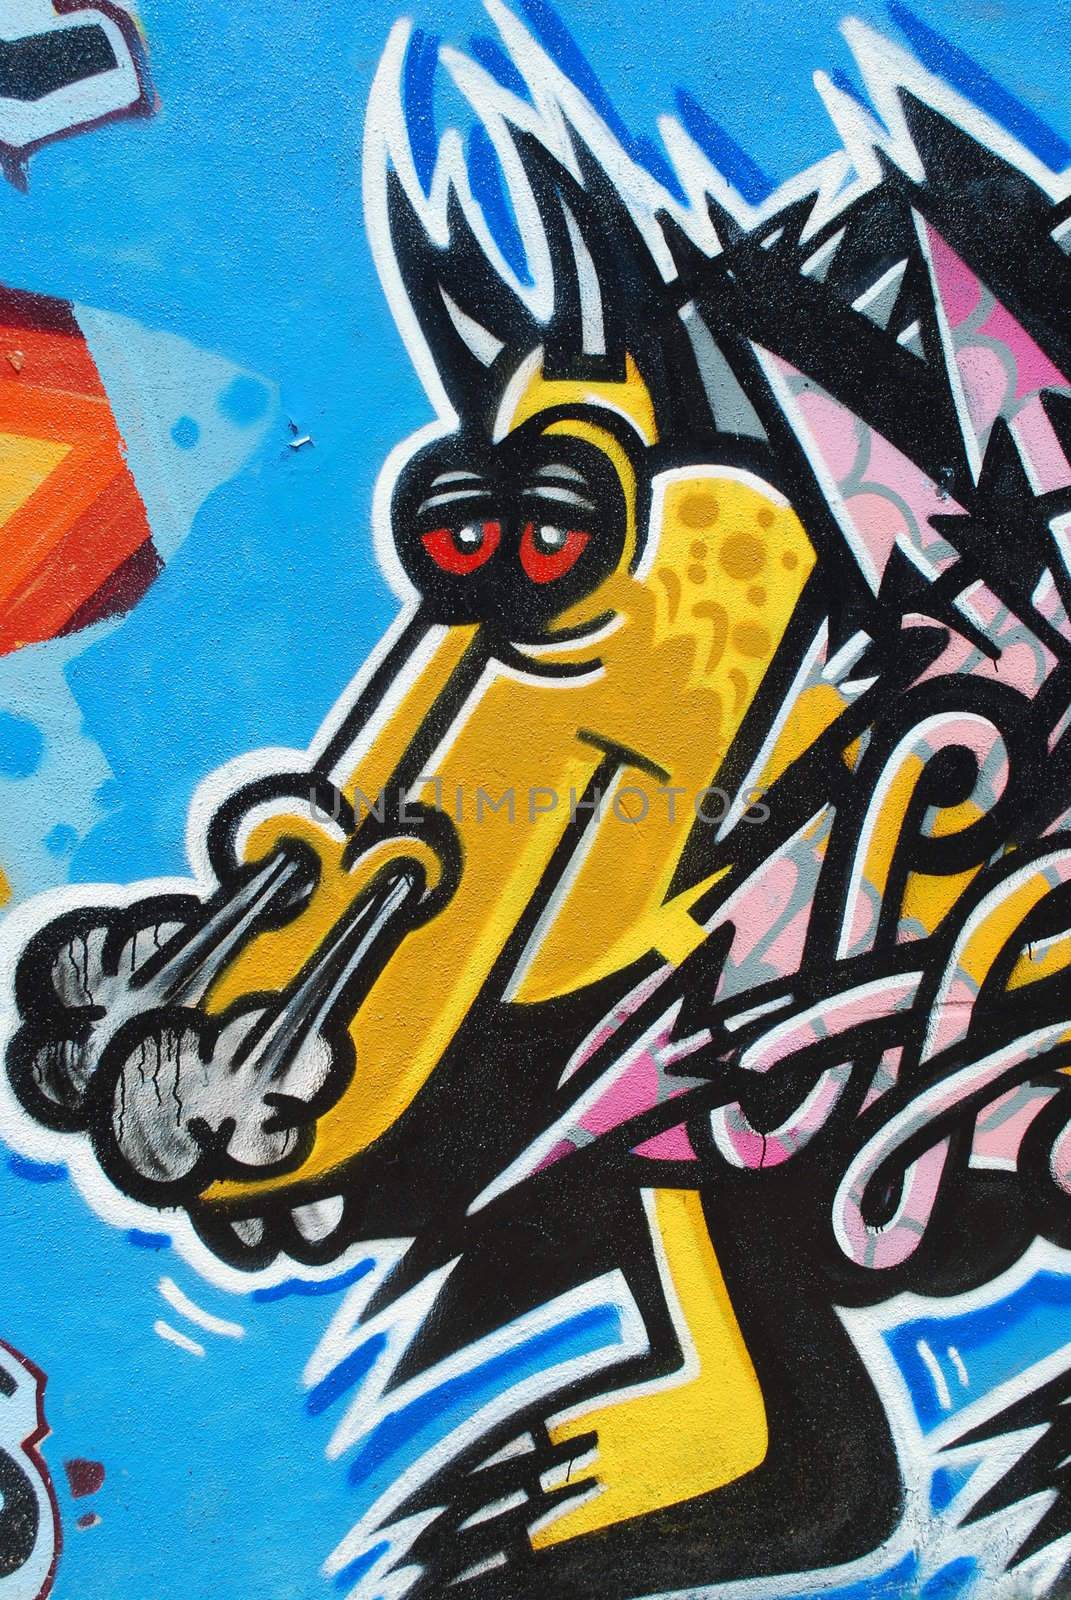 Graffiti Wall (Dragon) by luissantos84